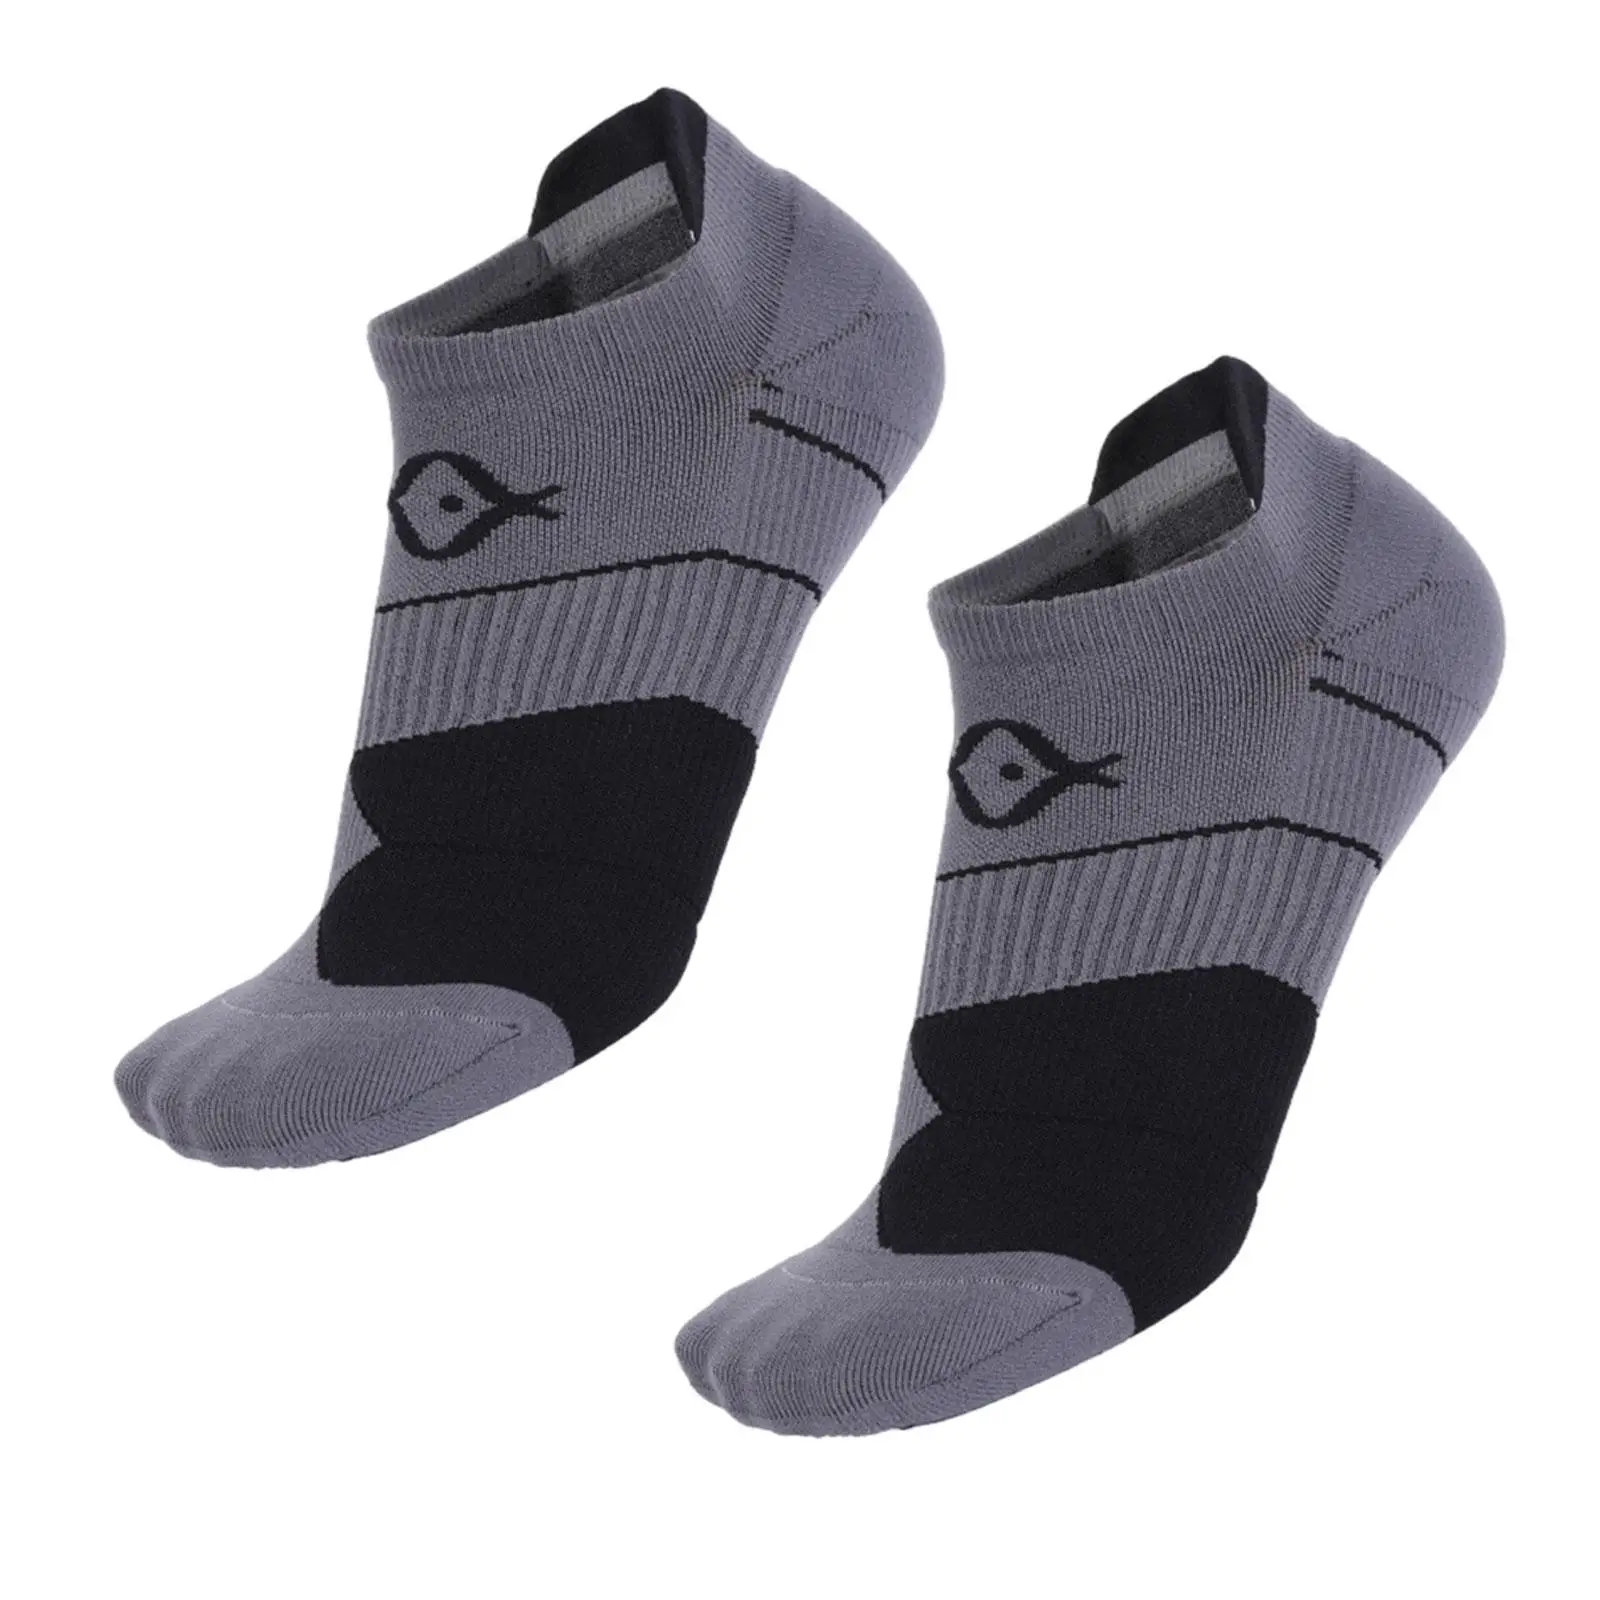 1 Pair Men Short Socks Warm Socks Casual Nylon Crew Socks Running Socks for Outdoor Activities Hiking Sports Cold Weather